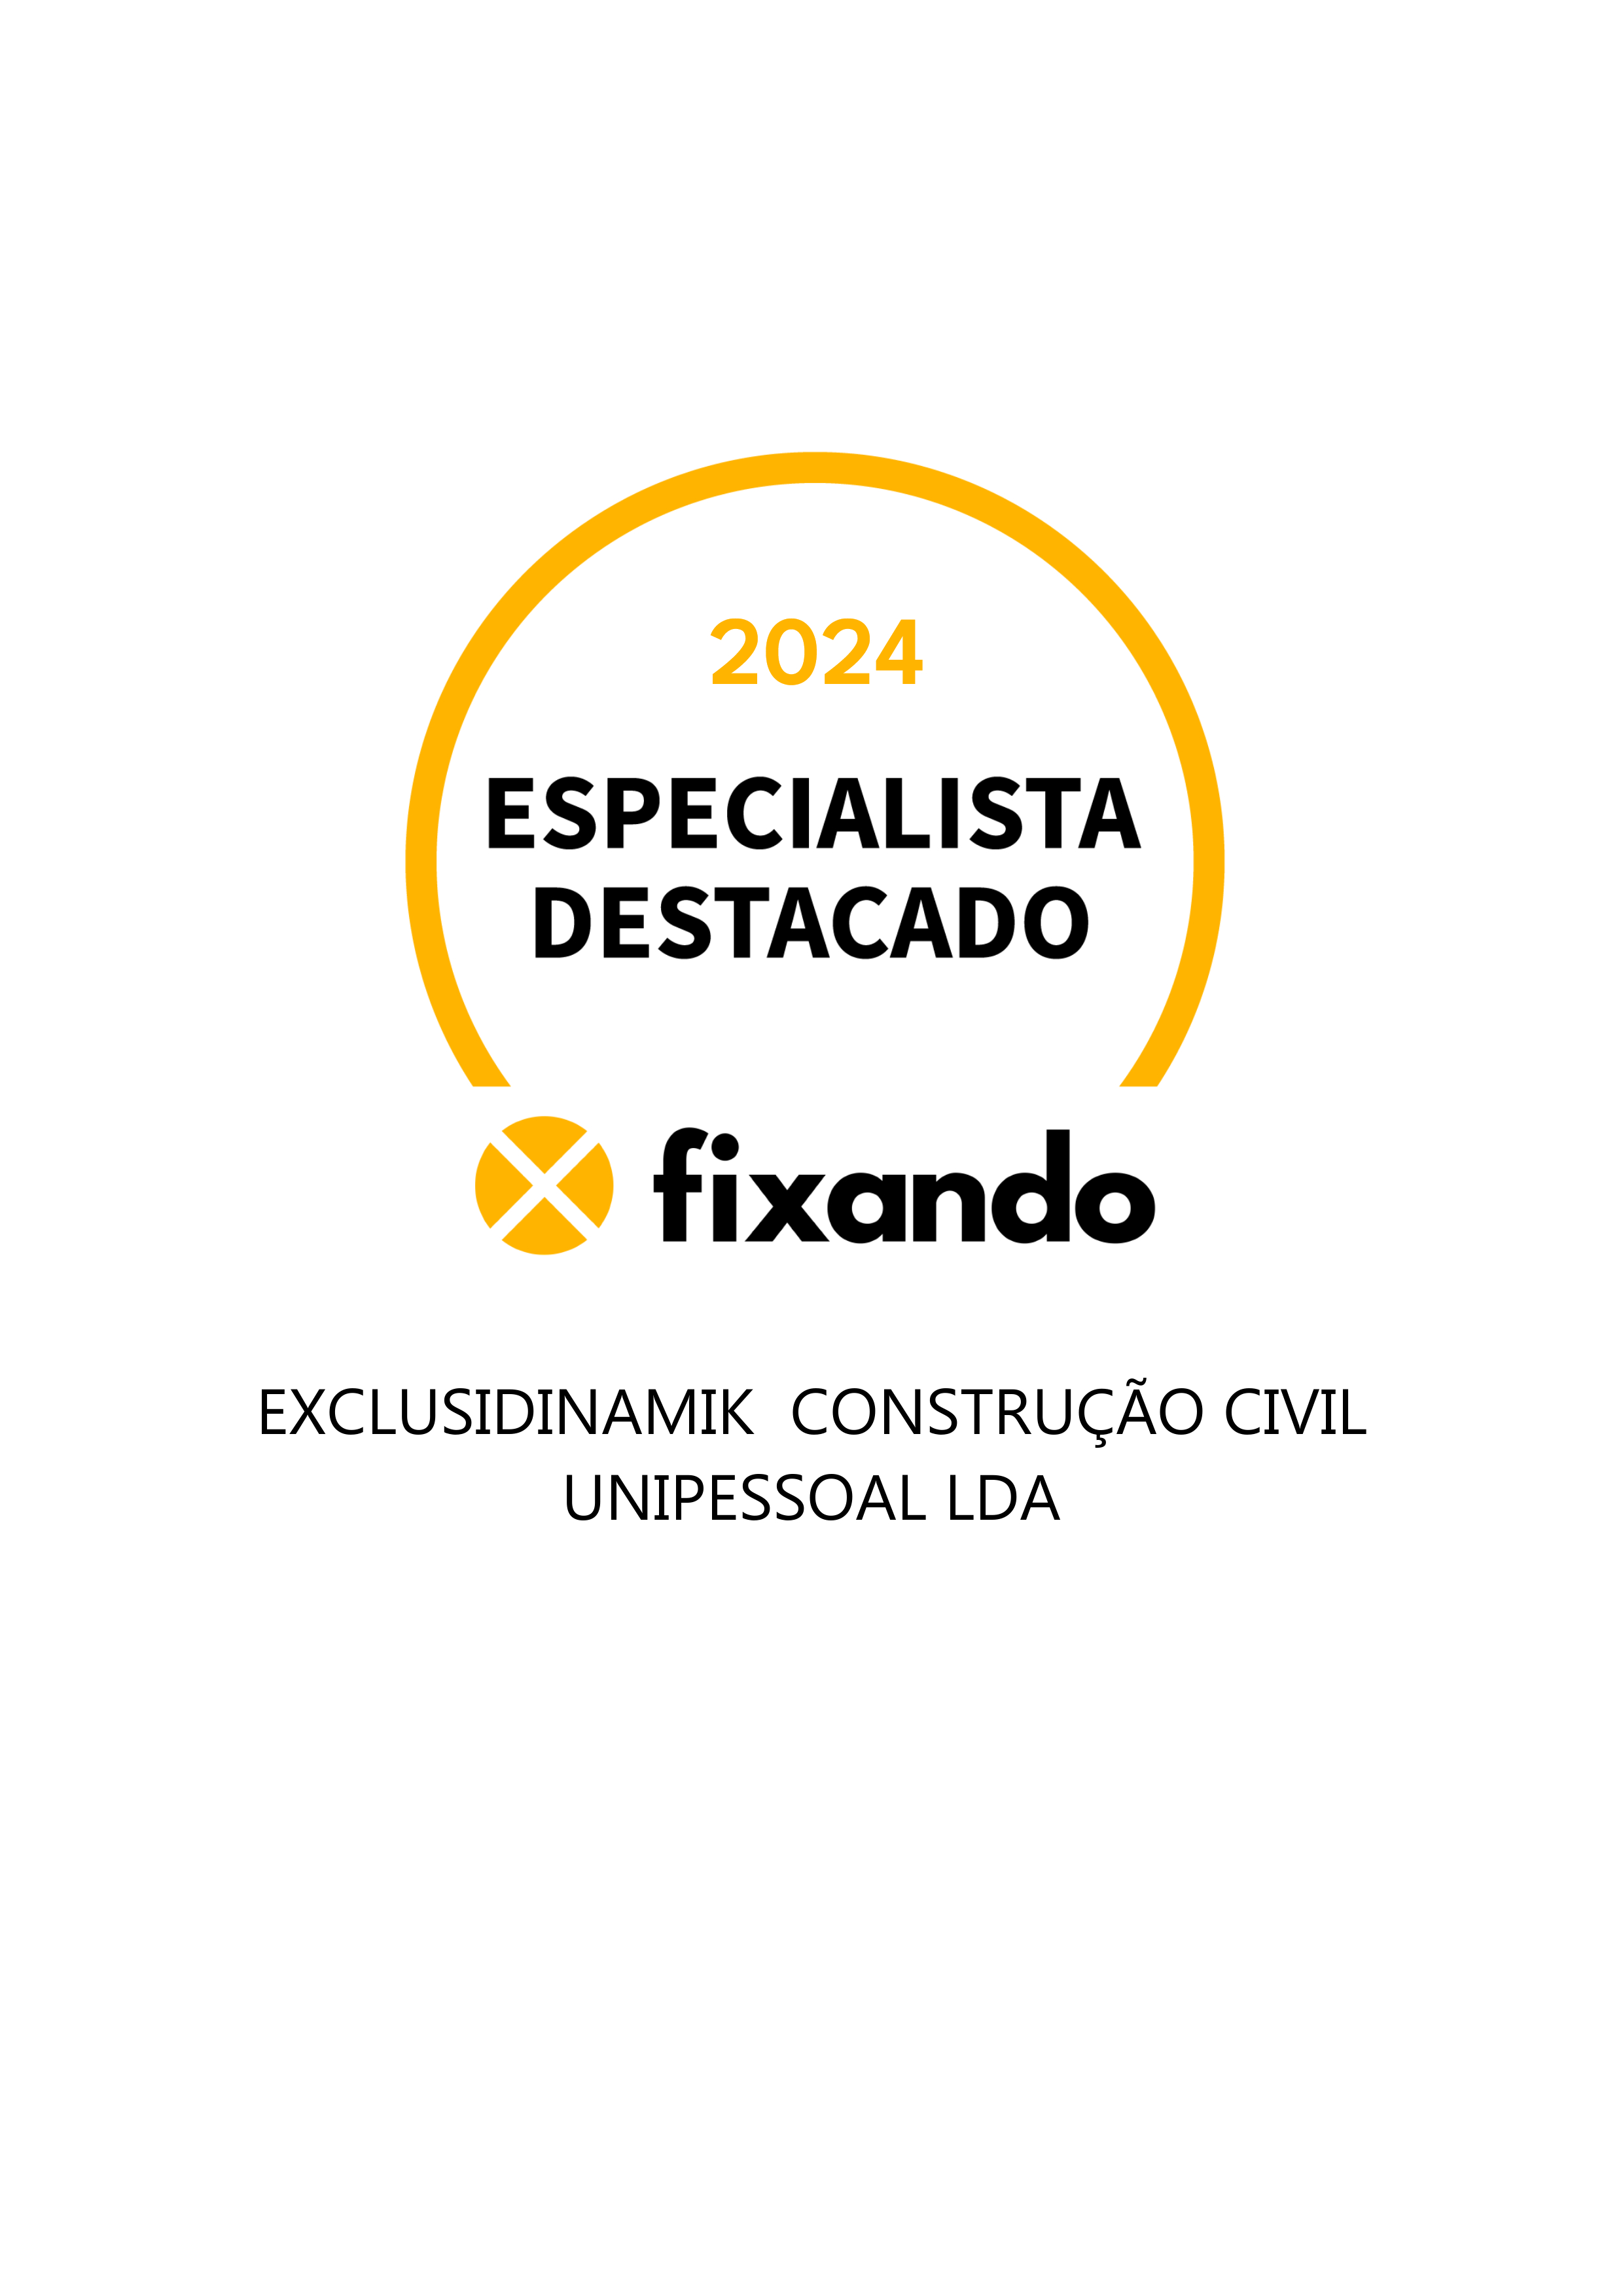 EXCLUSIDINAMIK  CONSTRUÇÃO CIVIL UNIPESSOAL LDA - Montijo - Limpeza de Chaminé